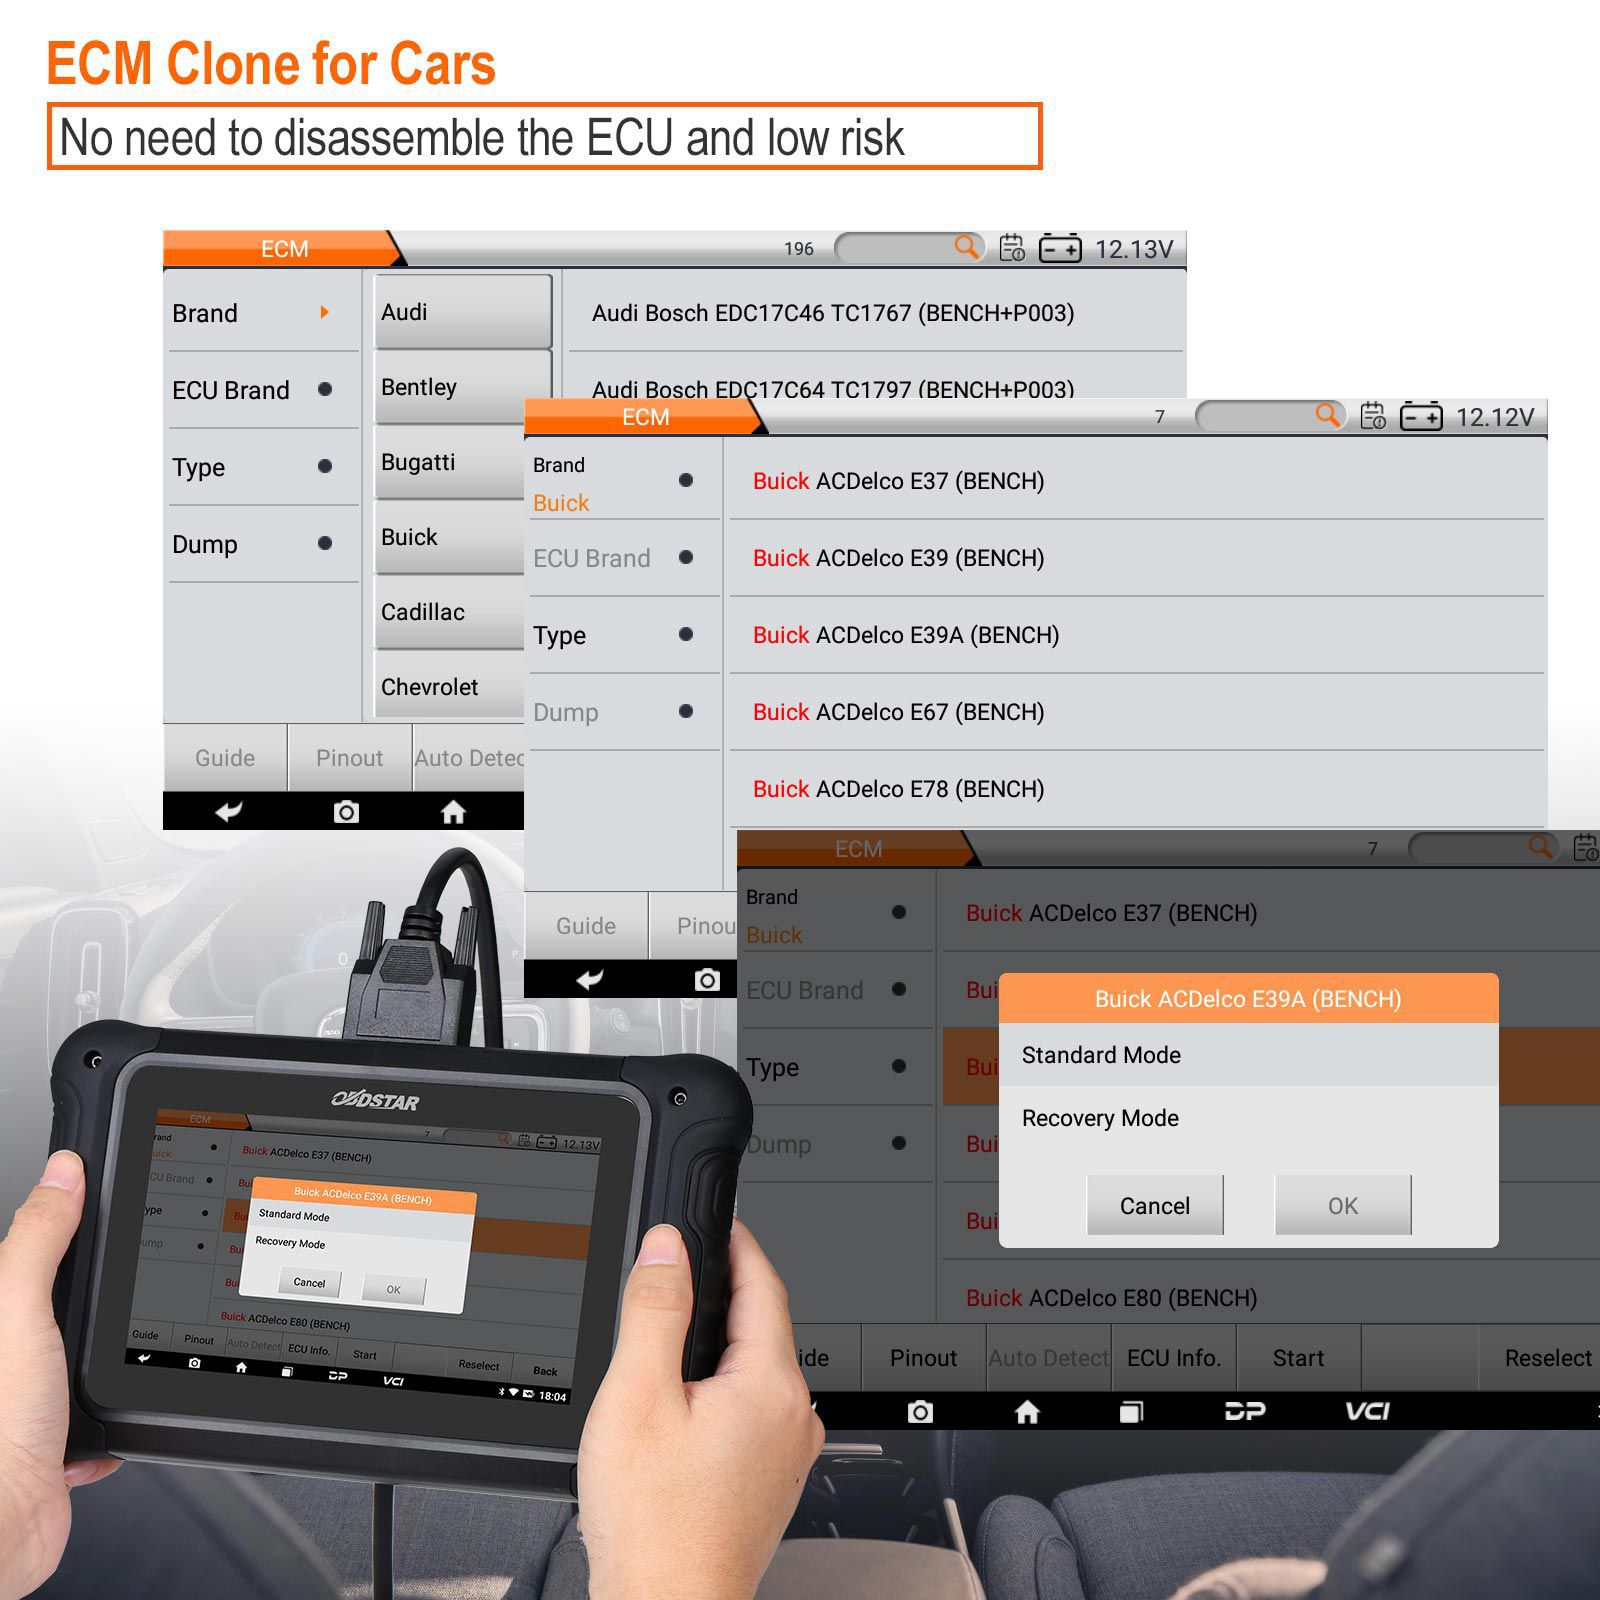 Obdstar dc706 voiture et moto ECM / TCM / body ECU outil clone ECU via obd ou mode banc